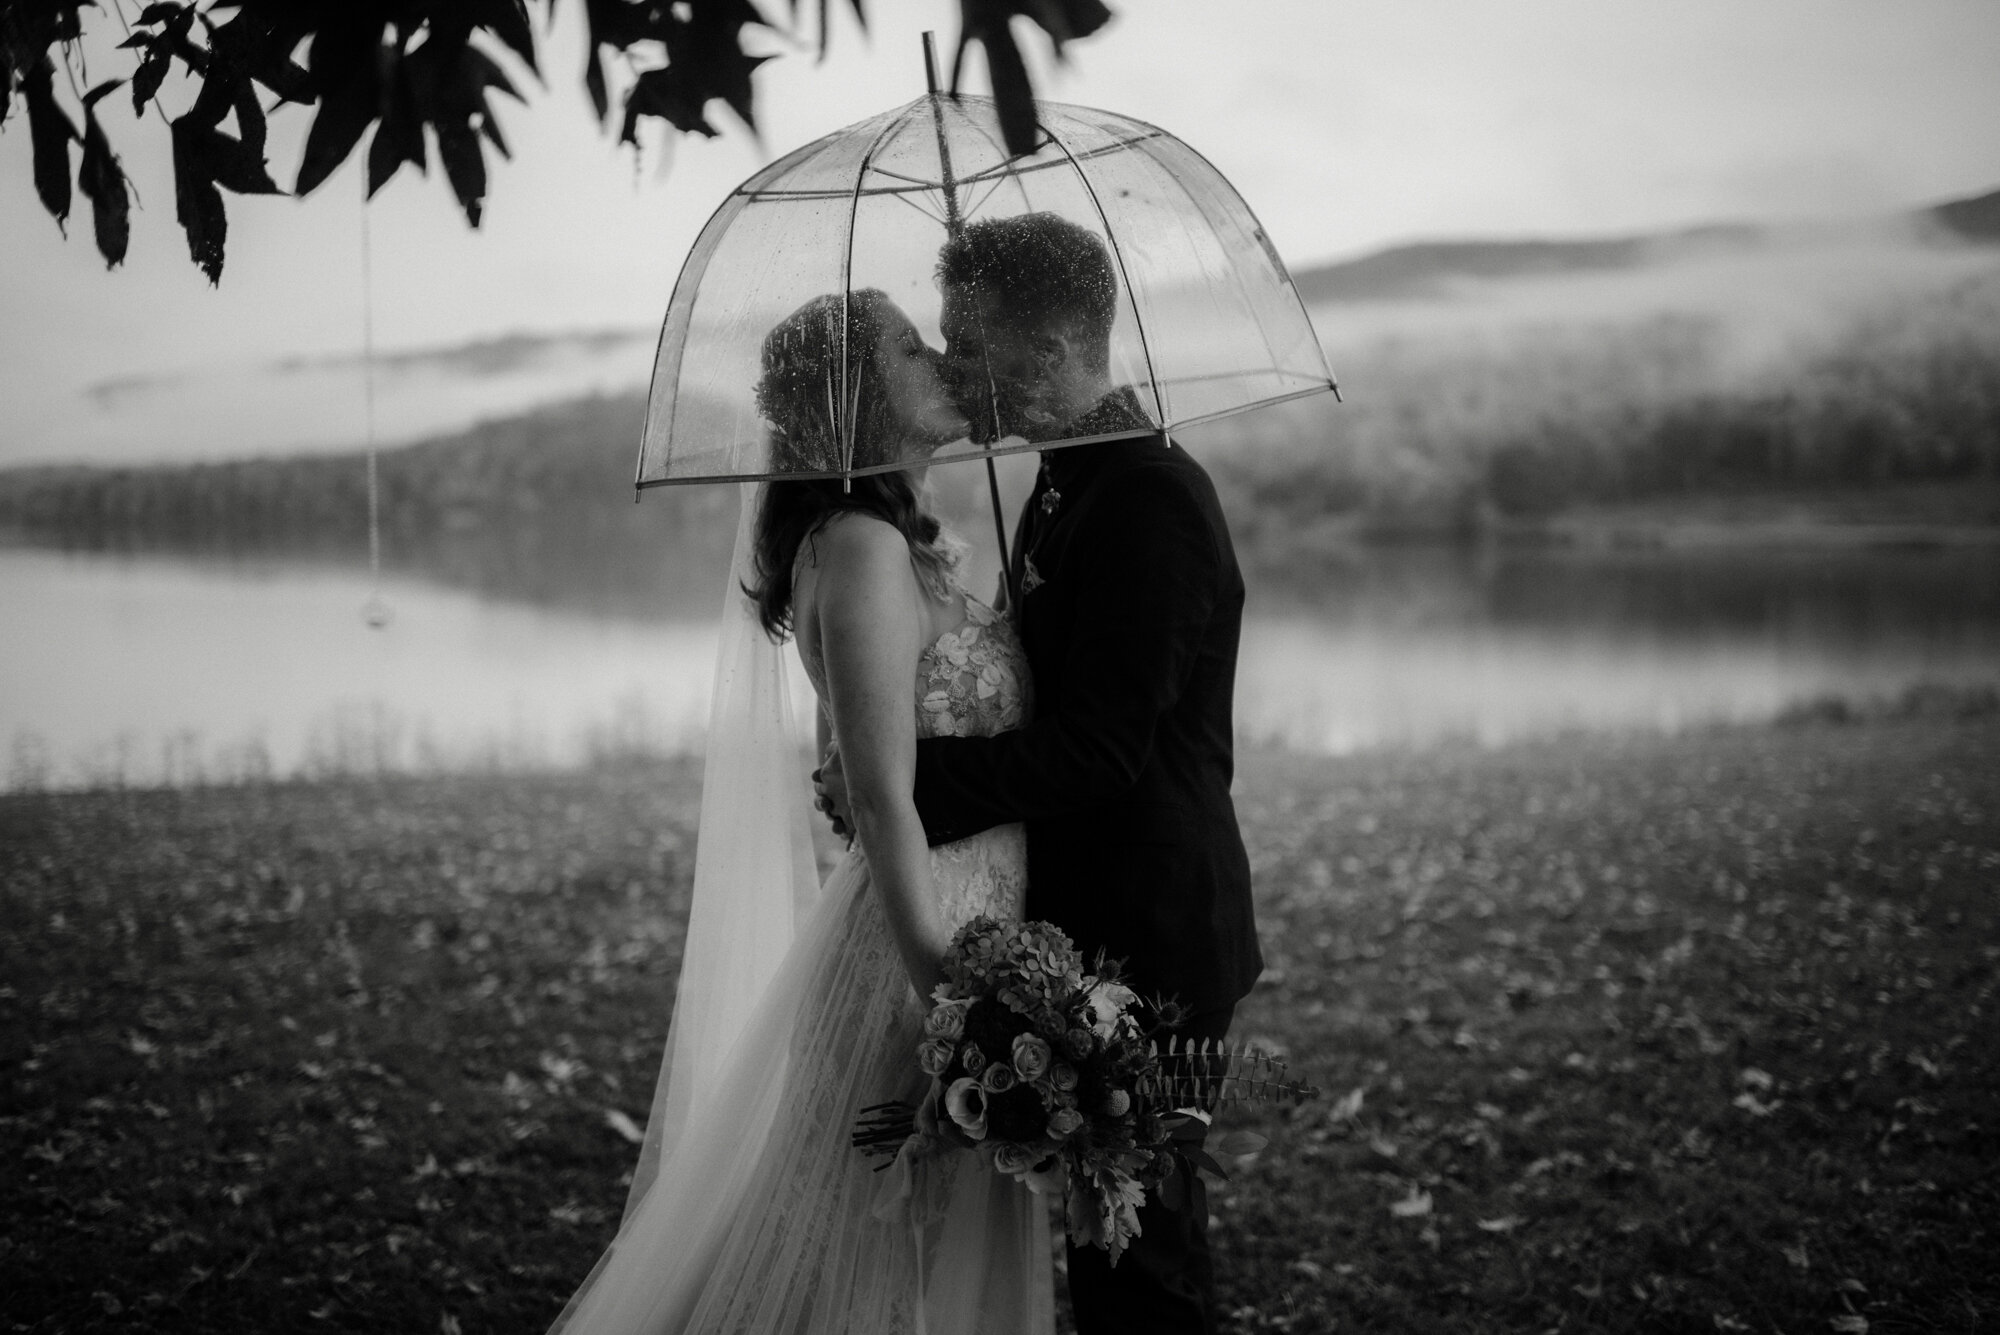 Sarah and Peyton - Rainy Autumn Wedding - Small Virginia Wedding - White Sails Creative Photography_26.jpg